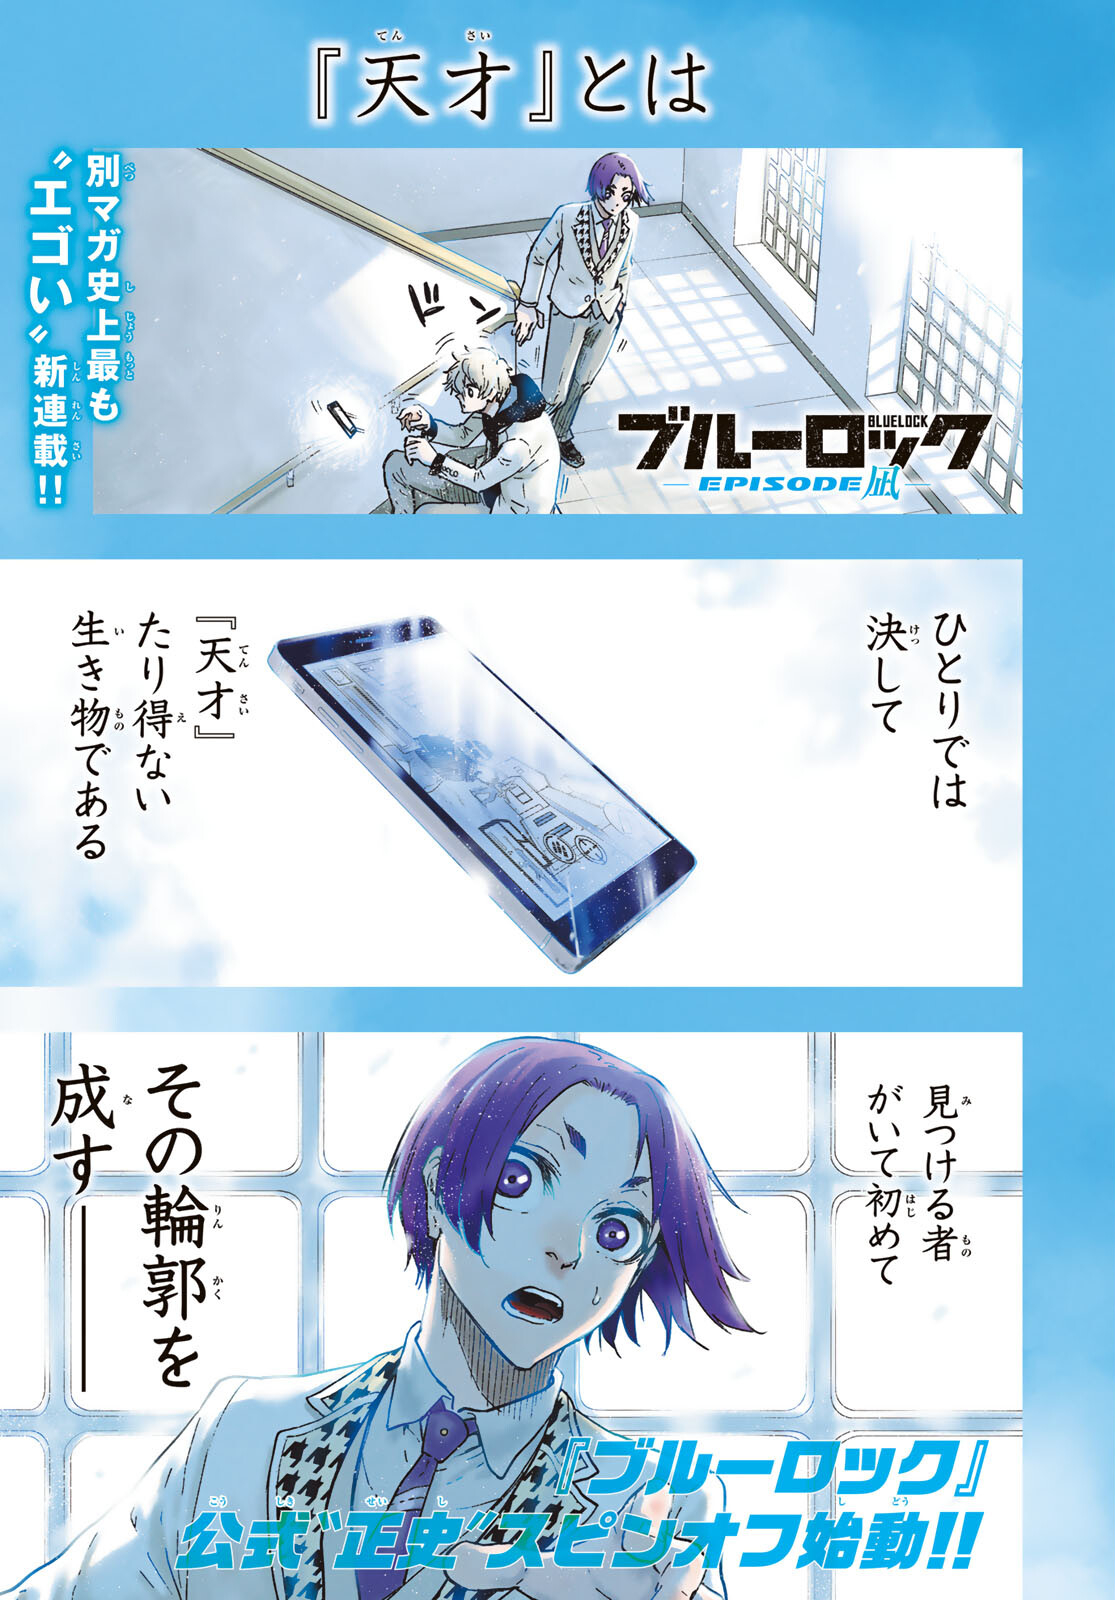 Chapter 13 (Episode Nagi), Blue Lock Wiki